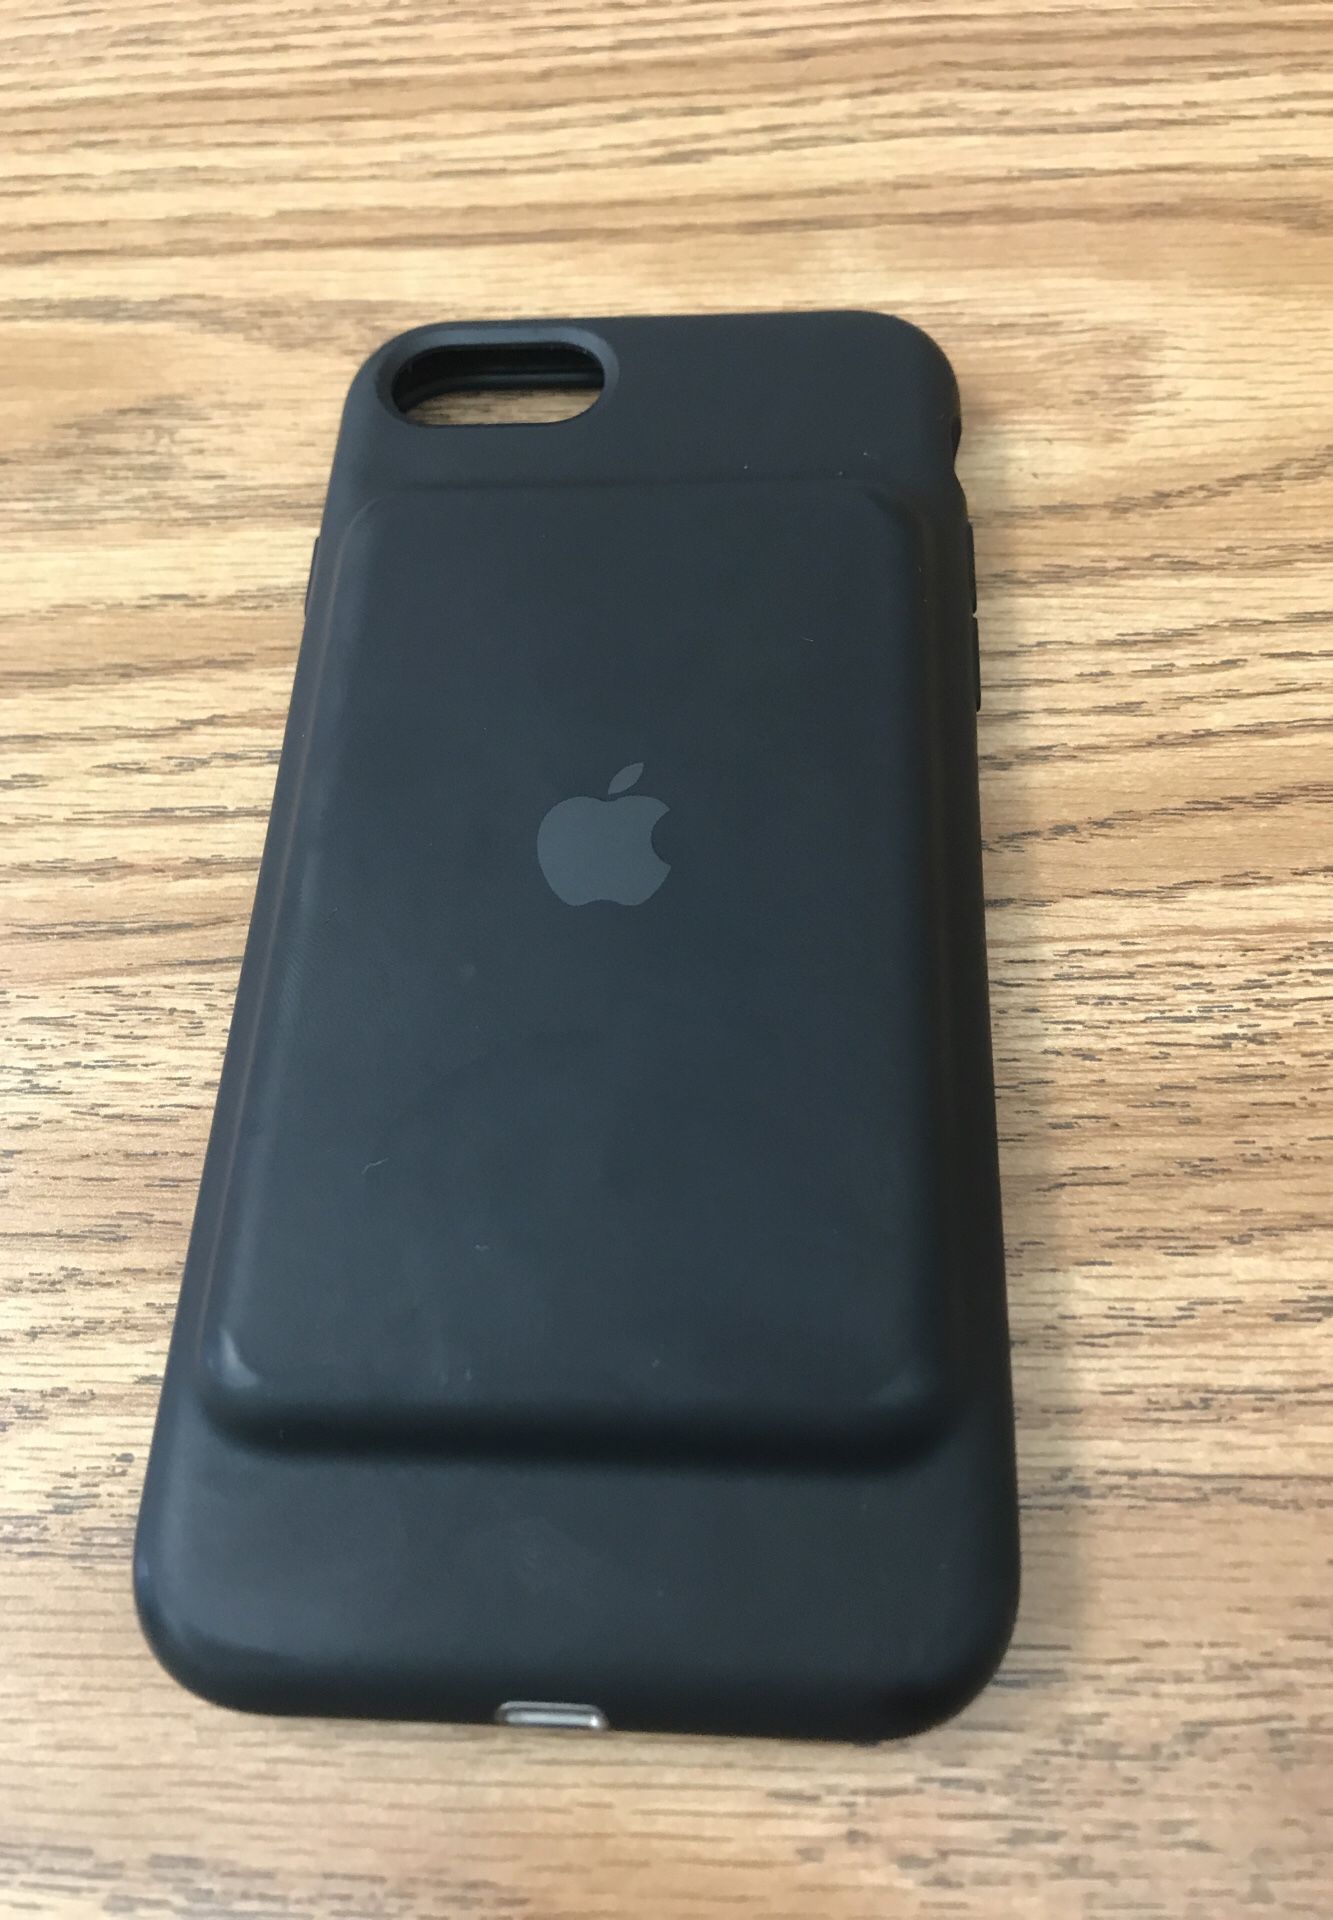 iPhone 6-8s Apple charging case